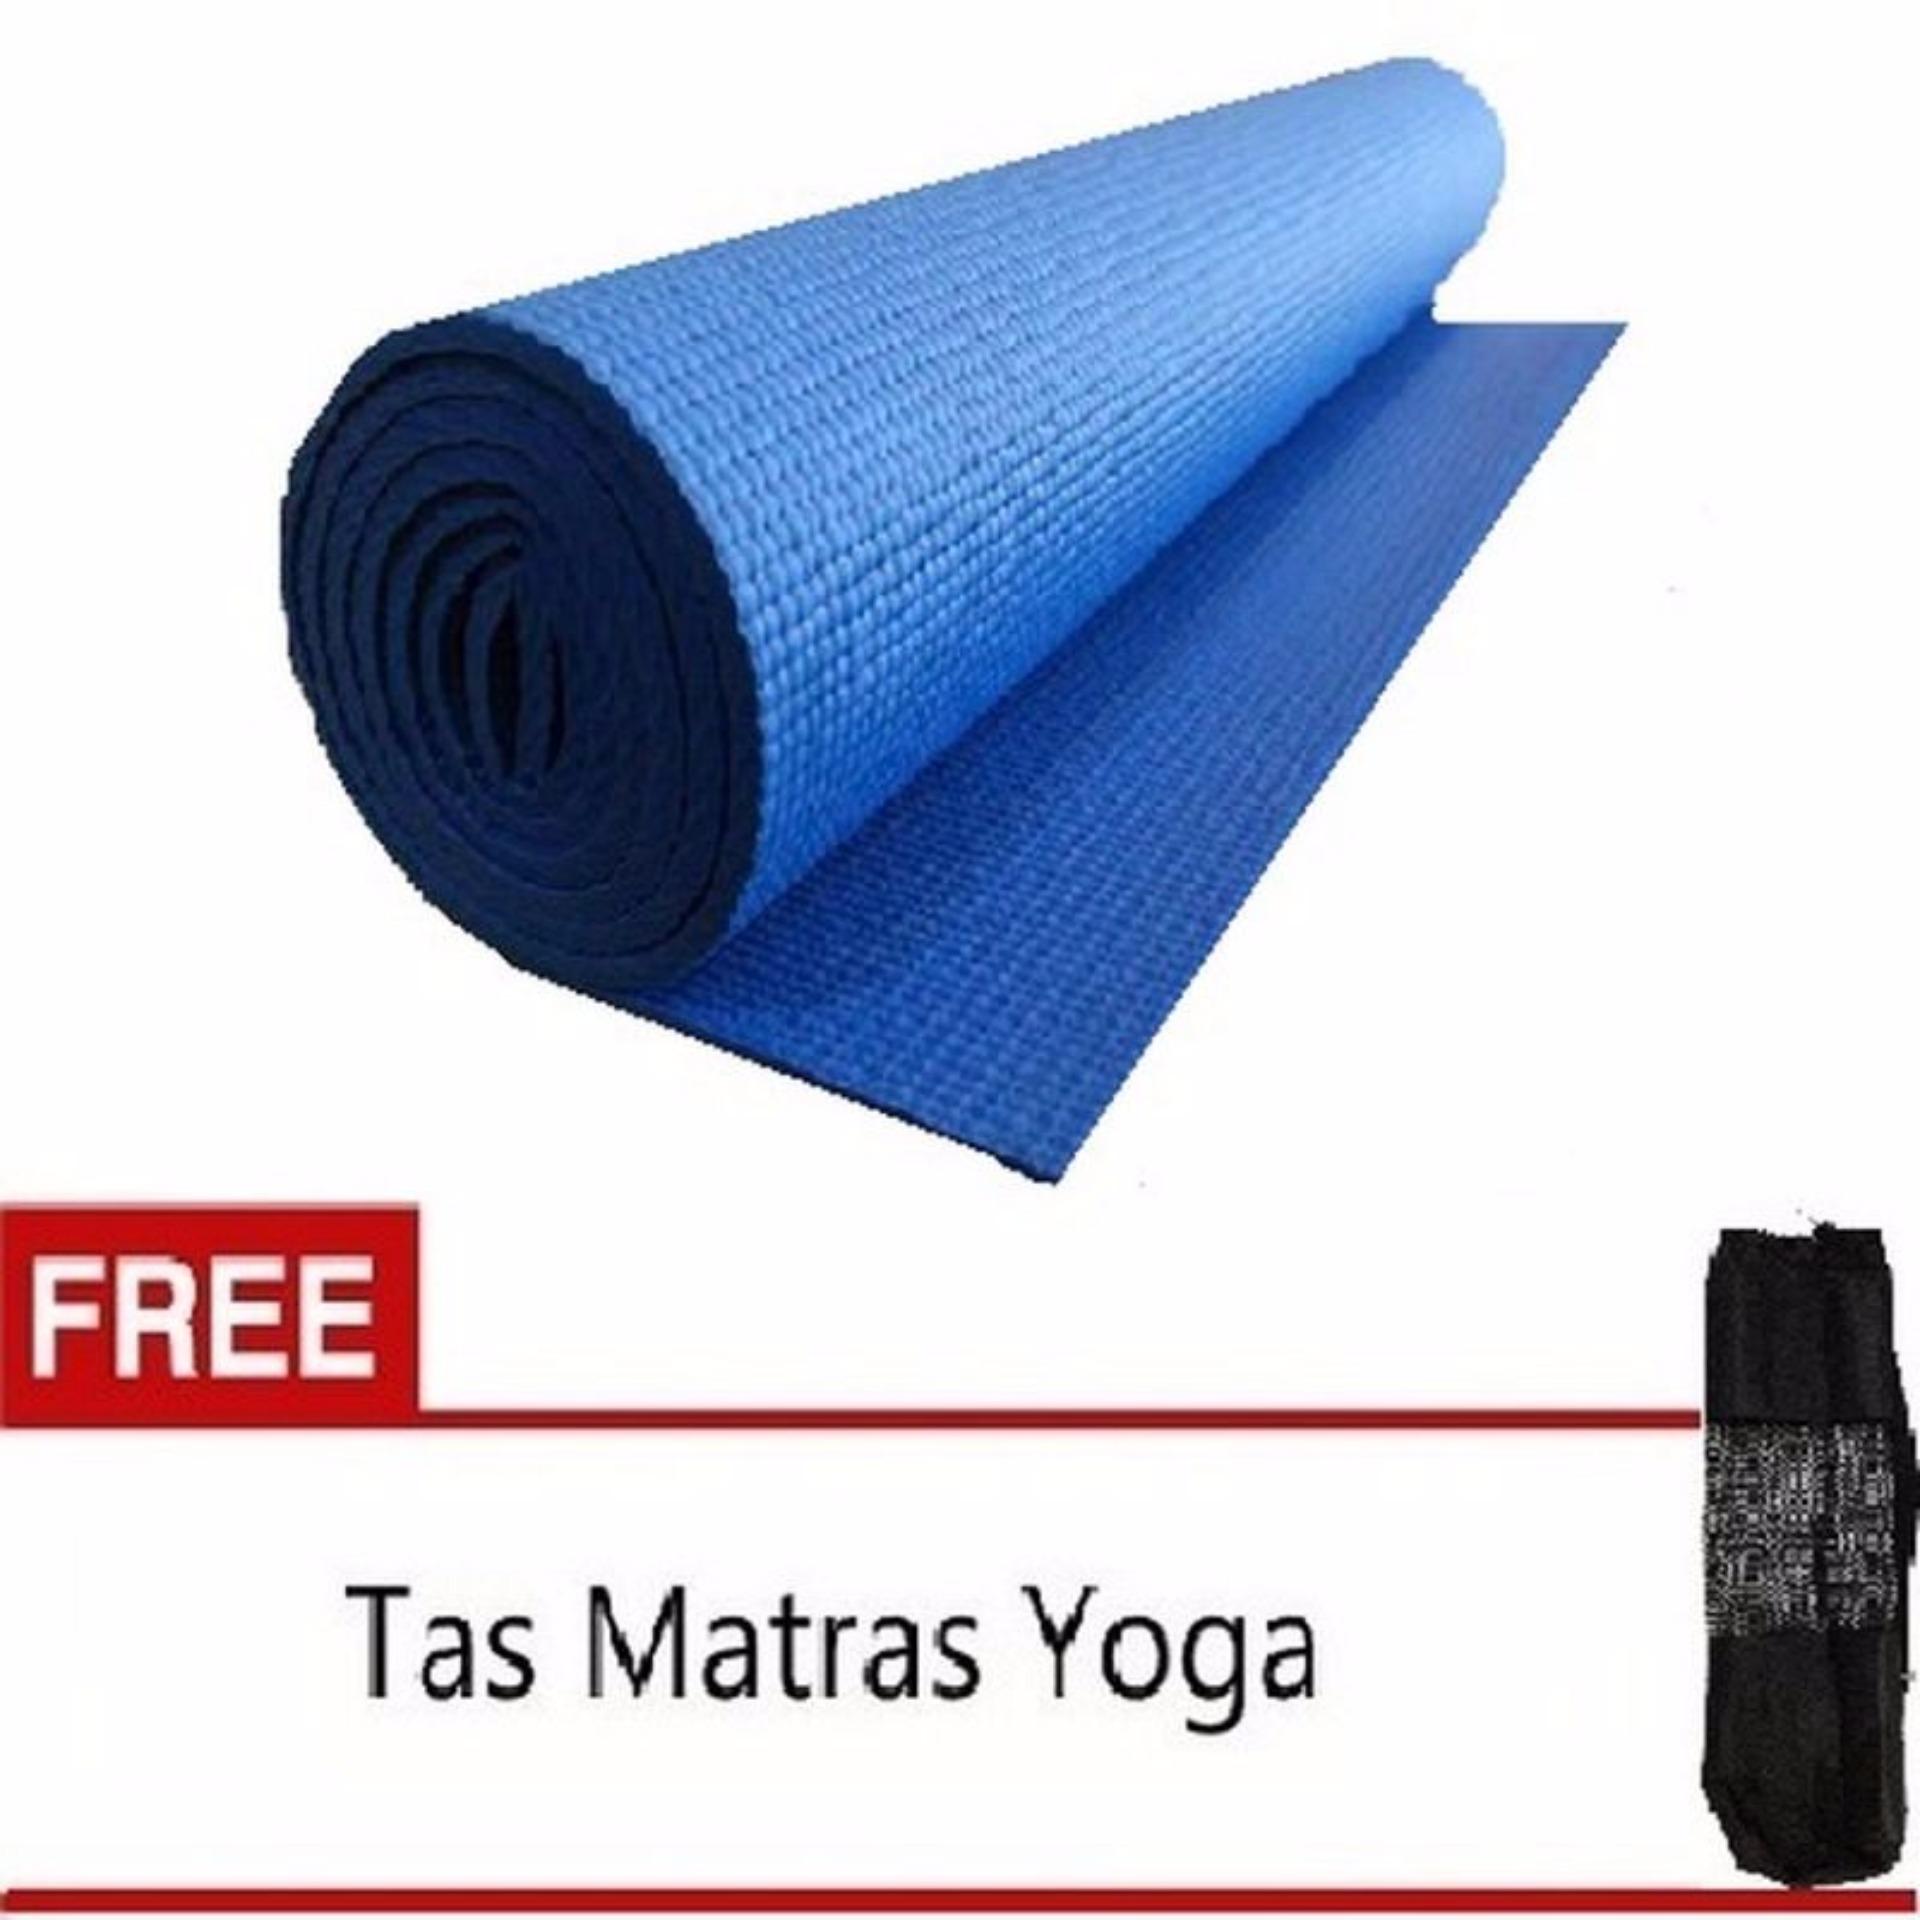 Matras Yoga - Navy Blue